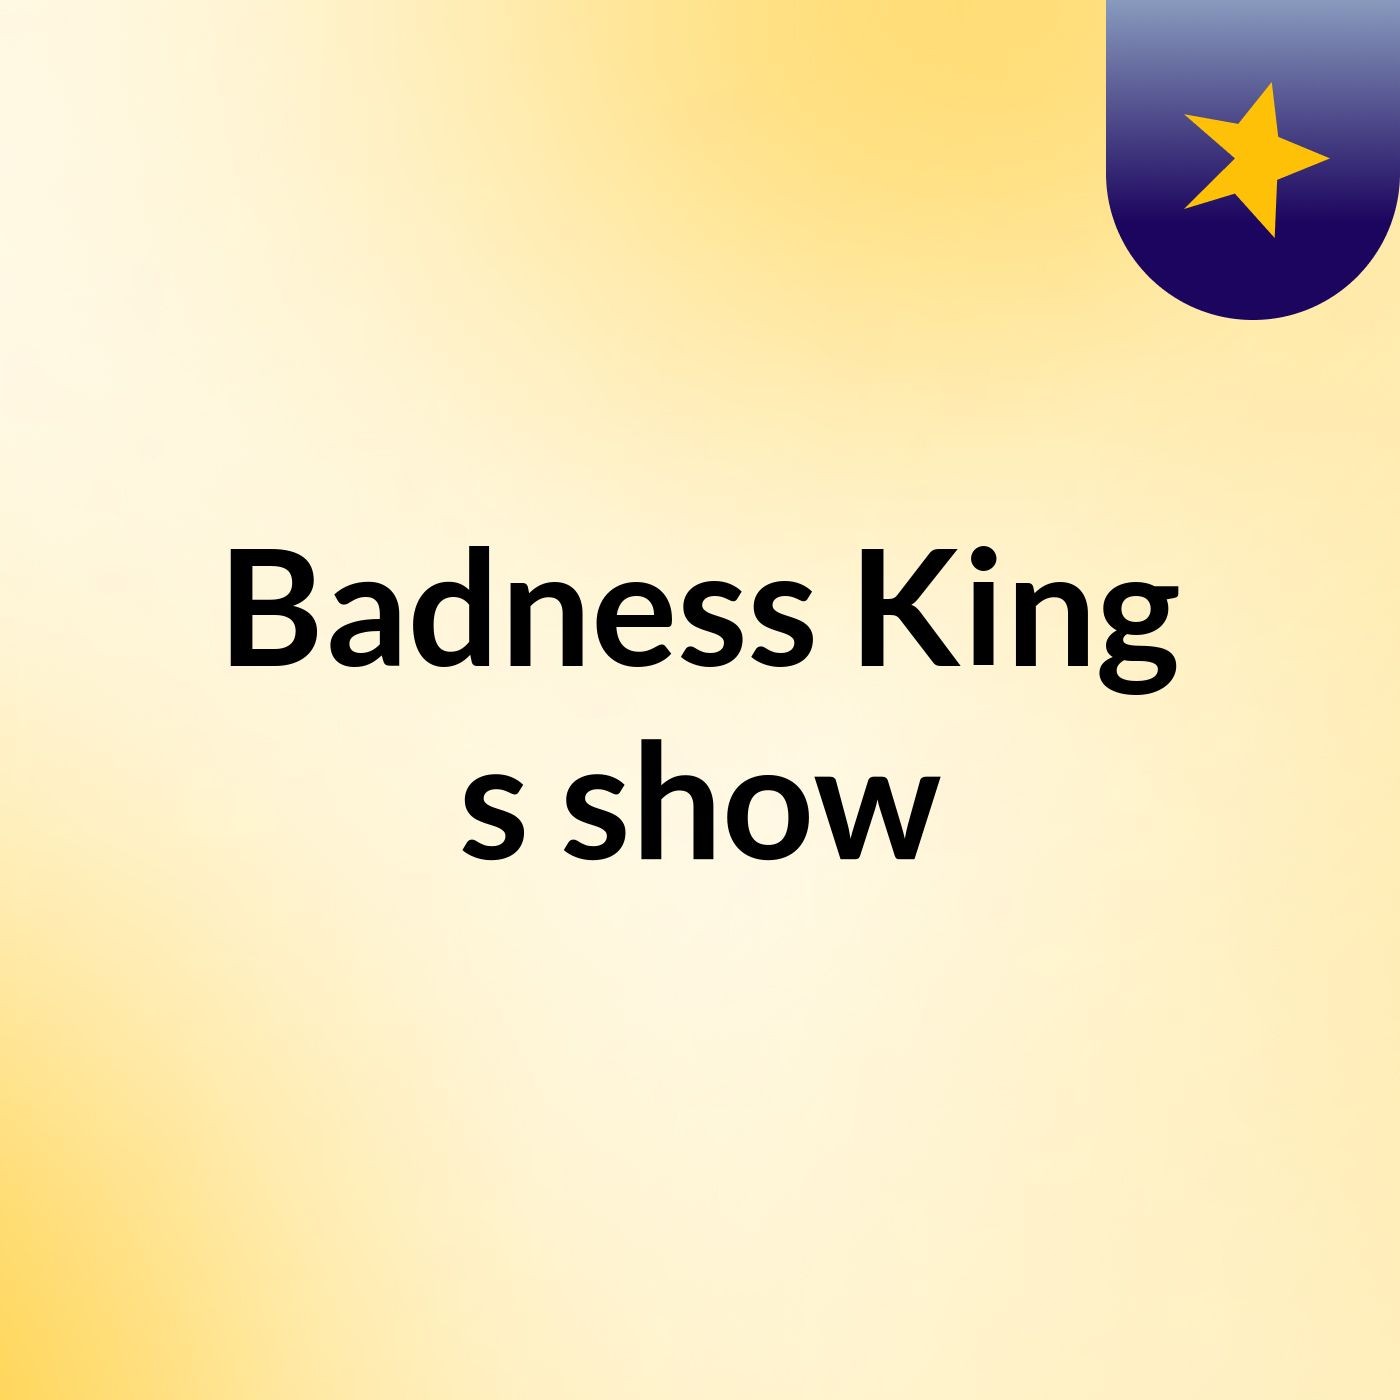 Badness King's show